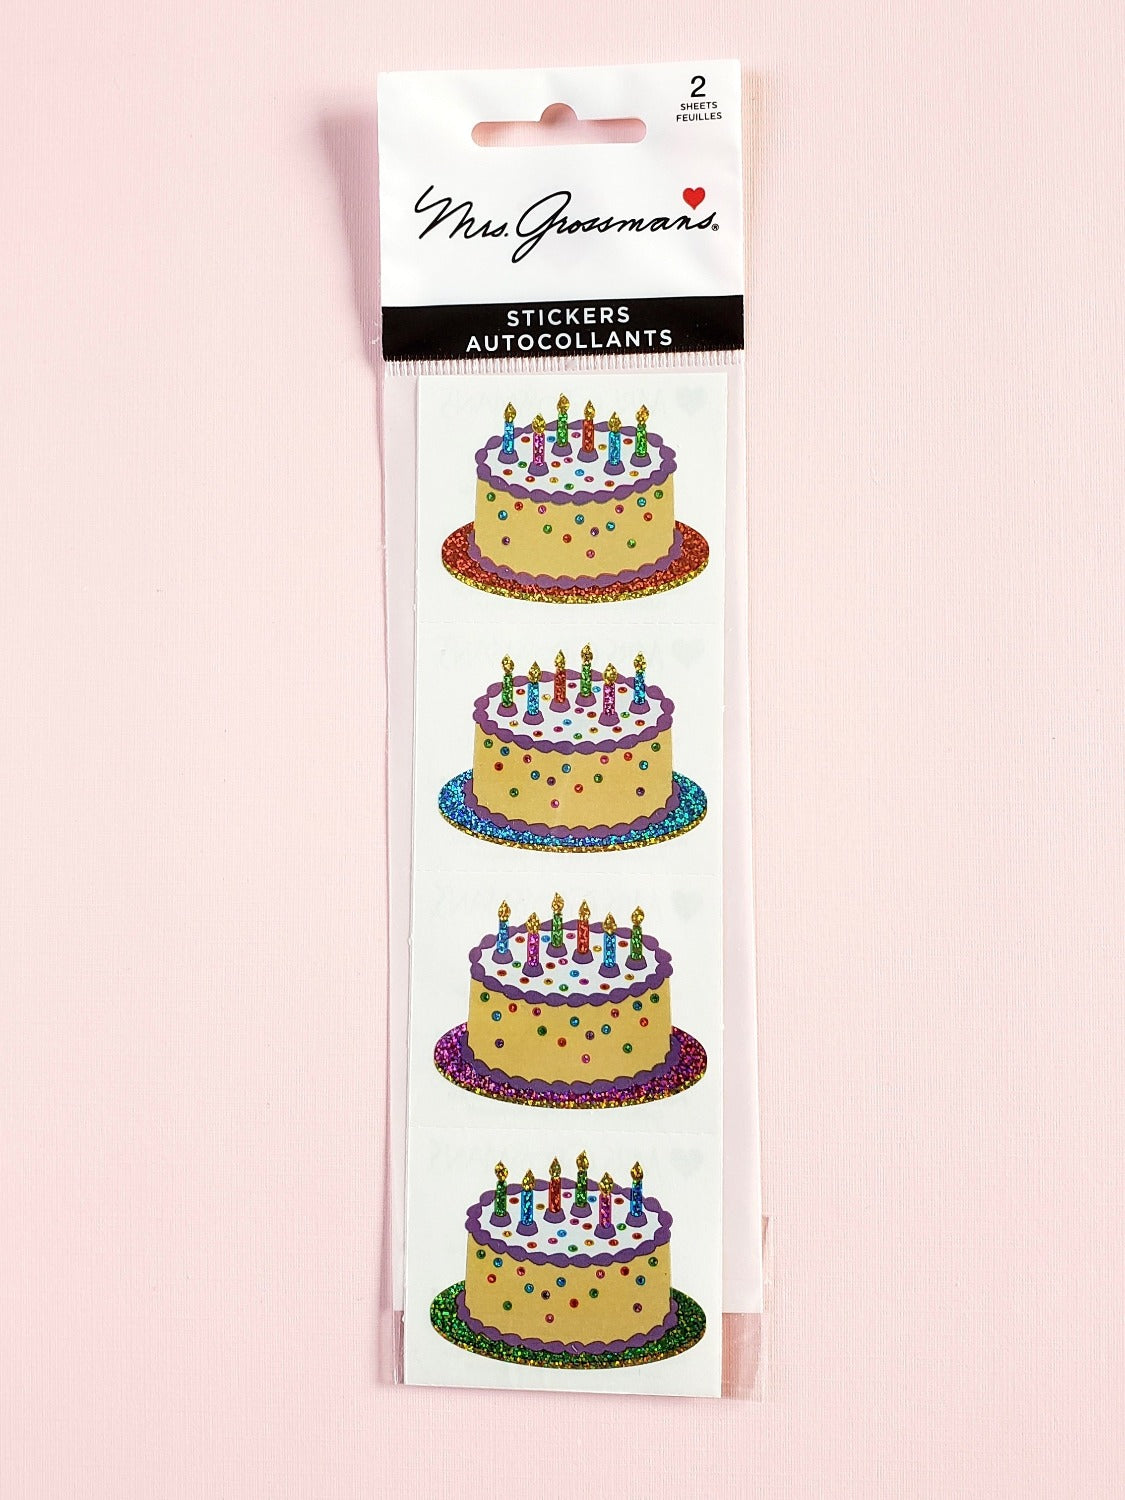 Mrs Grossman's Sparkly Birthday Cake stickers